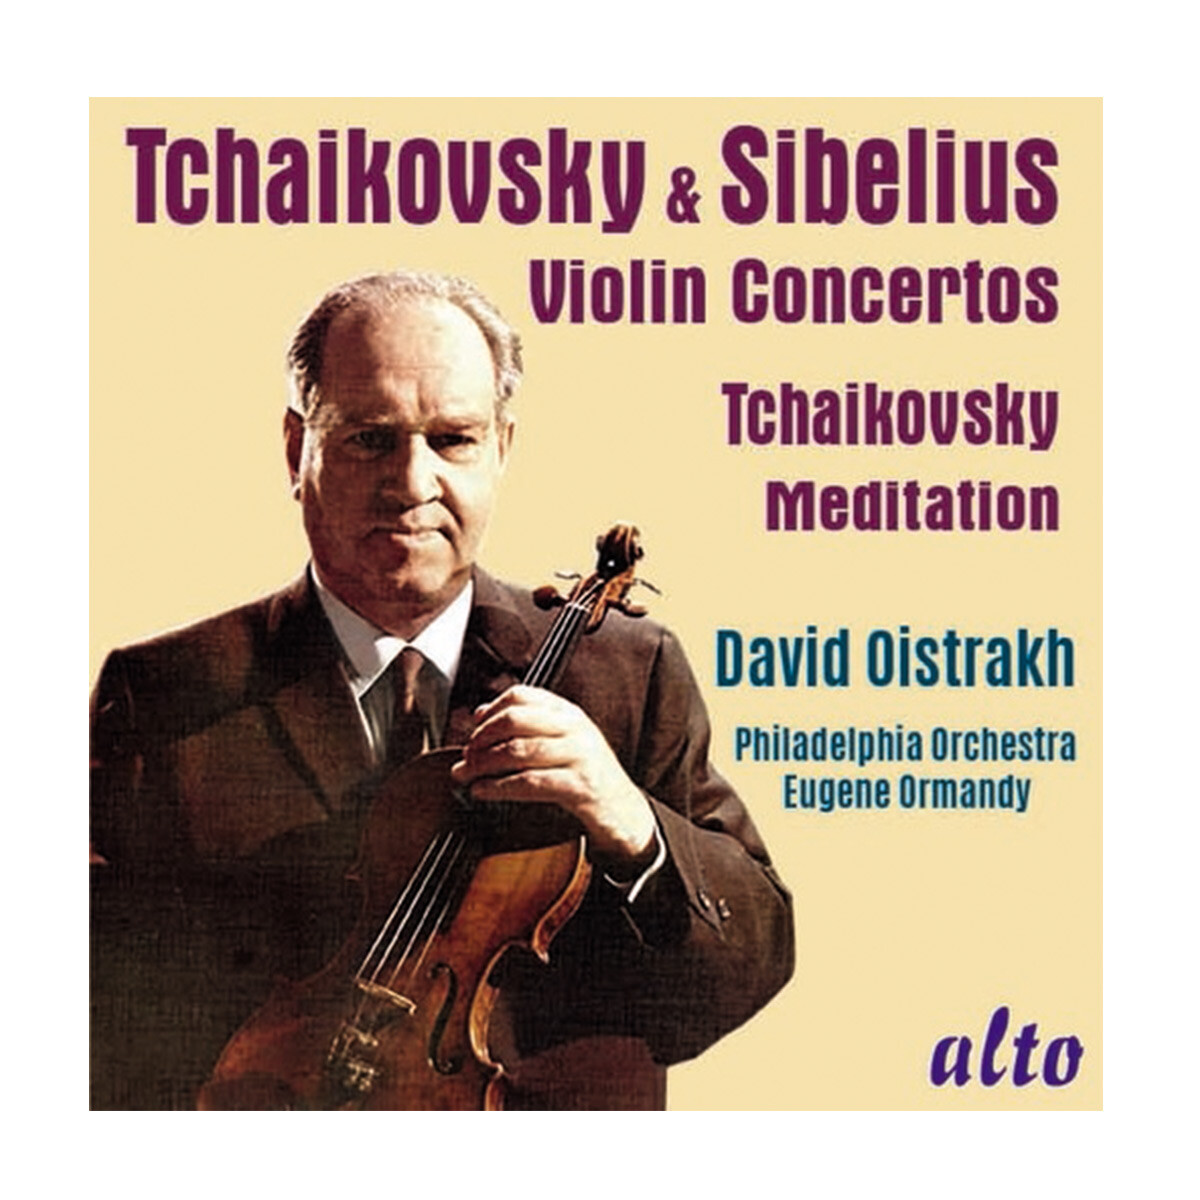 Oistrakh, David / Philadelphia Orchestra - Tchaikovsky & Sibelius Violin Concertos Meditation - Cd 